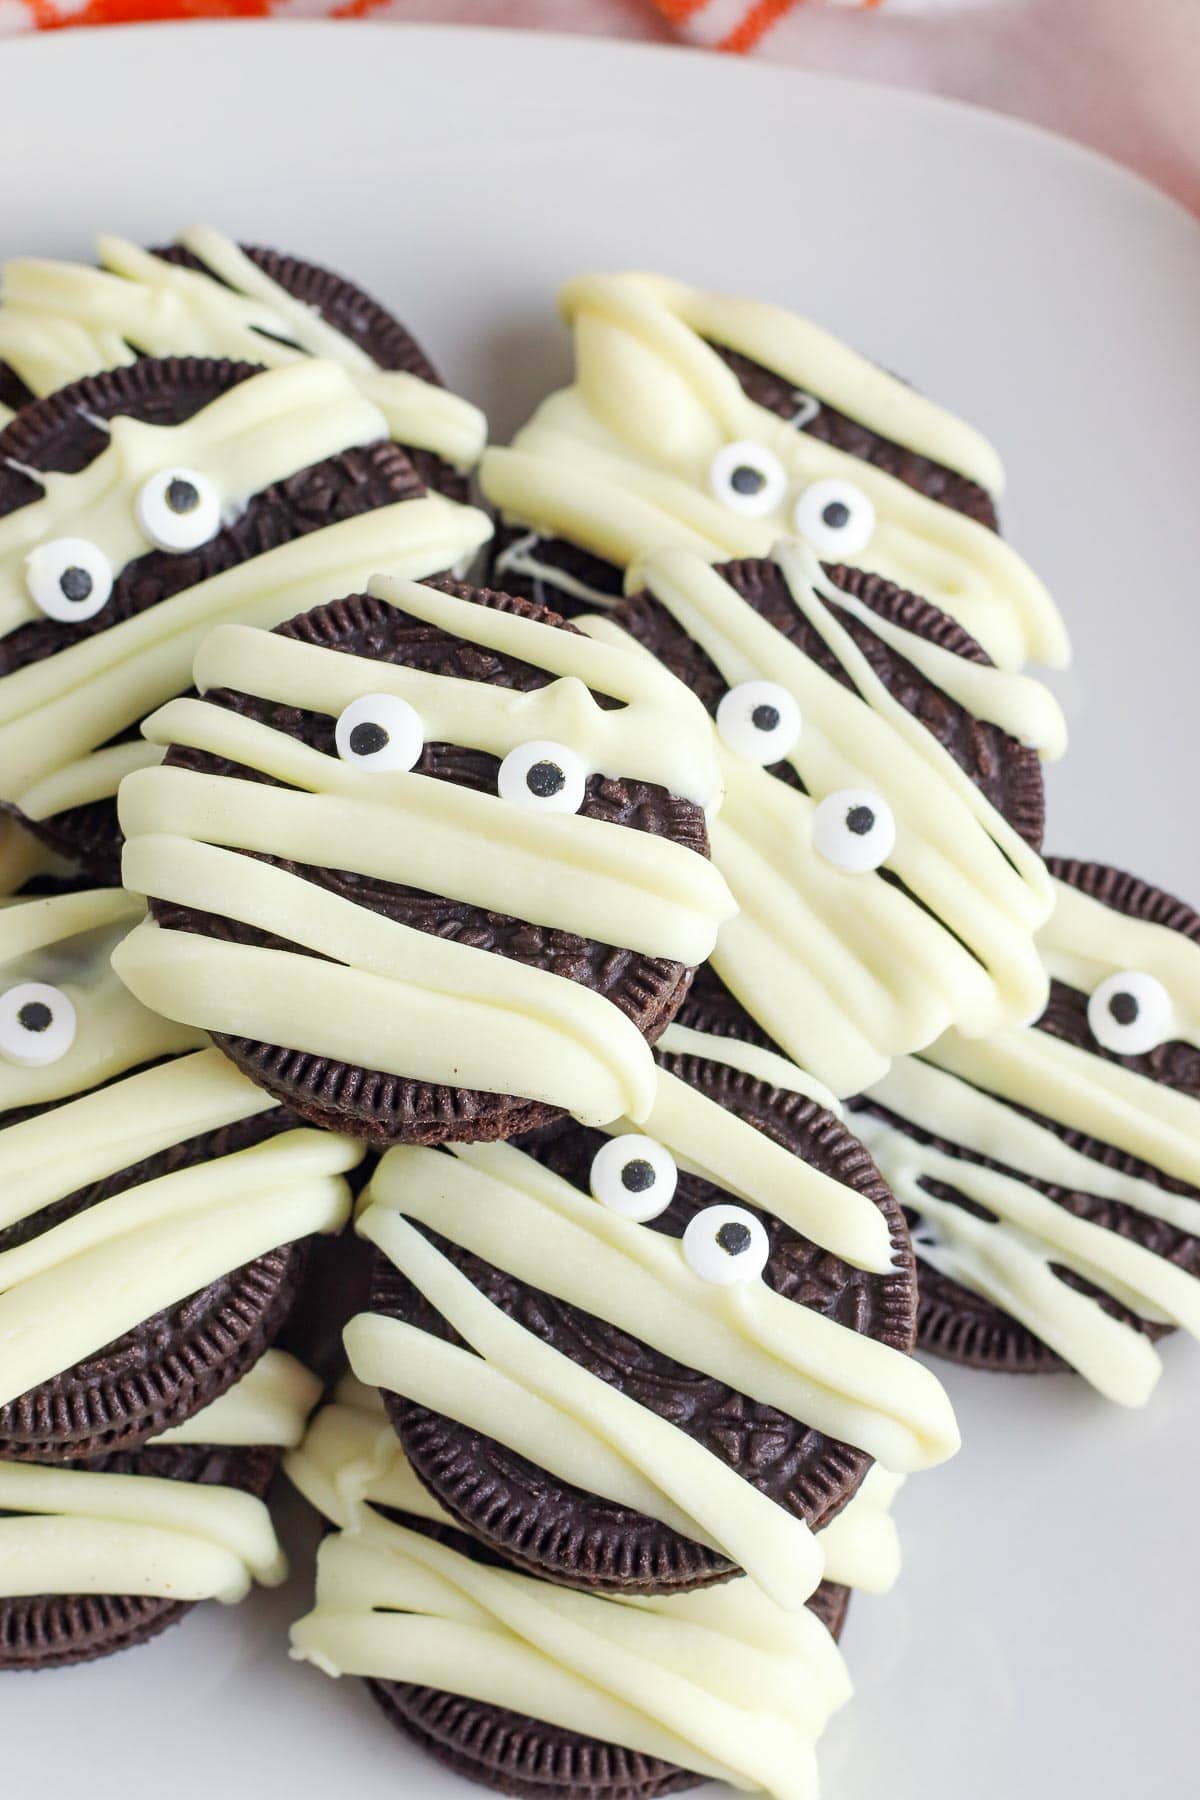 mummy cookies close up 